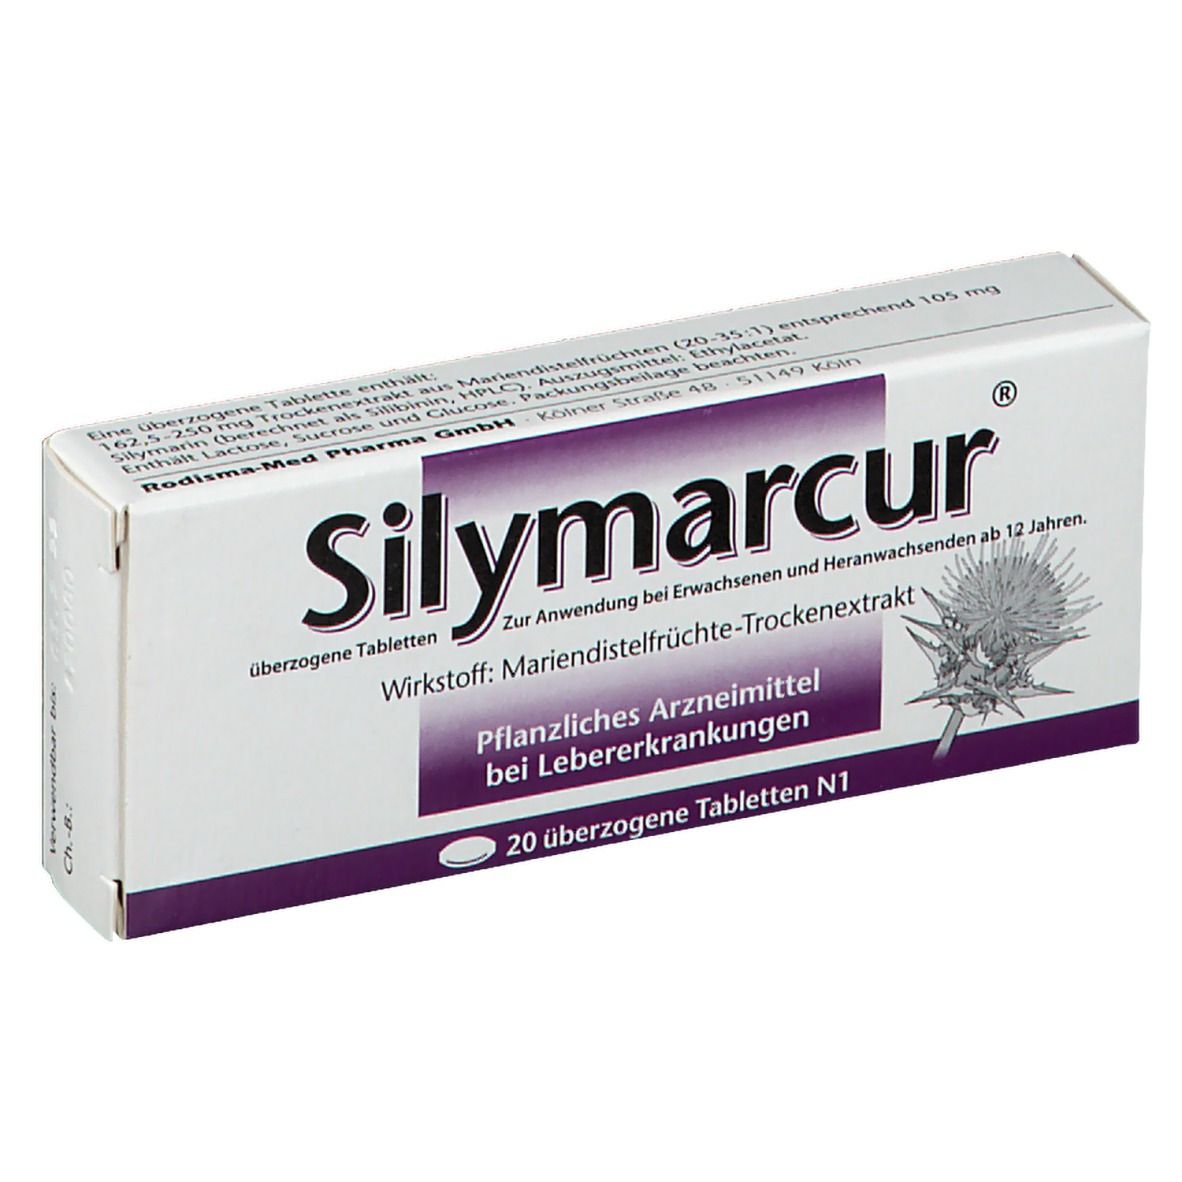 Silymarcur®